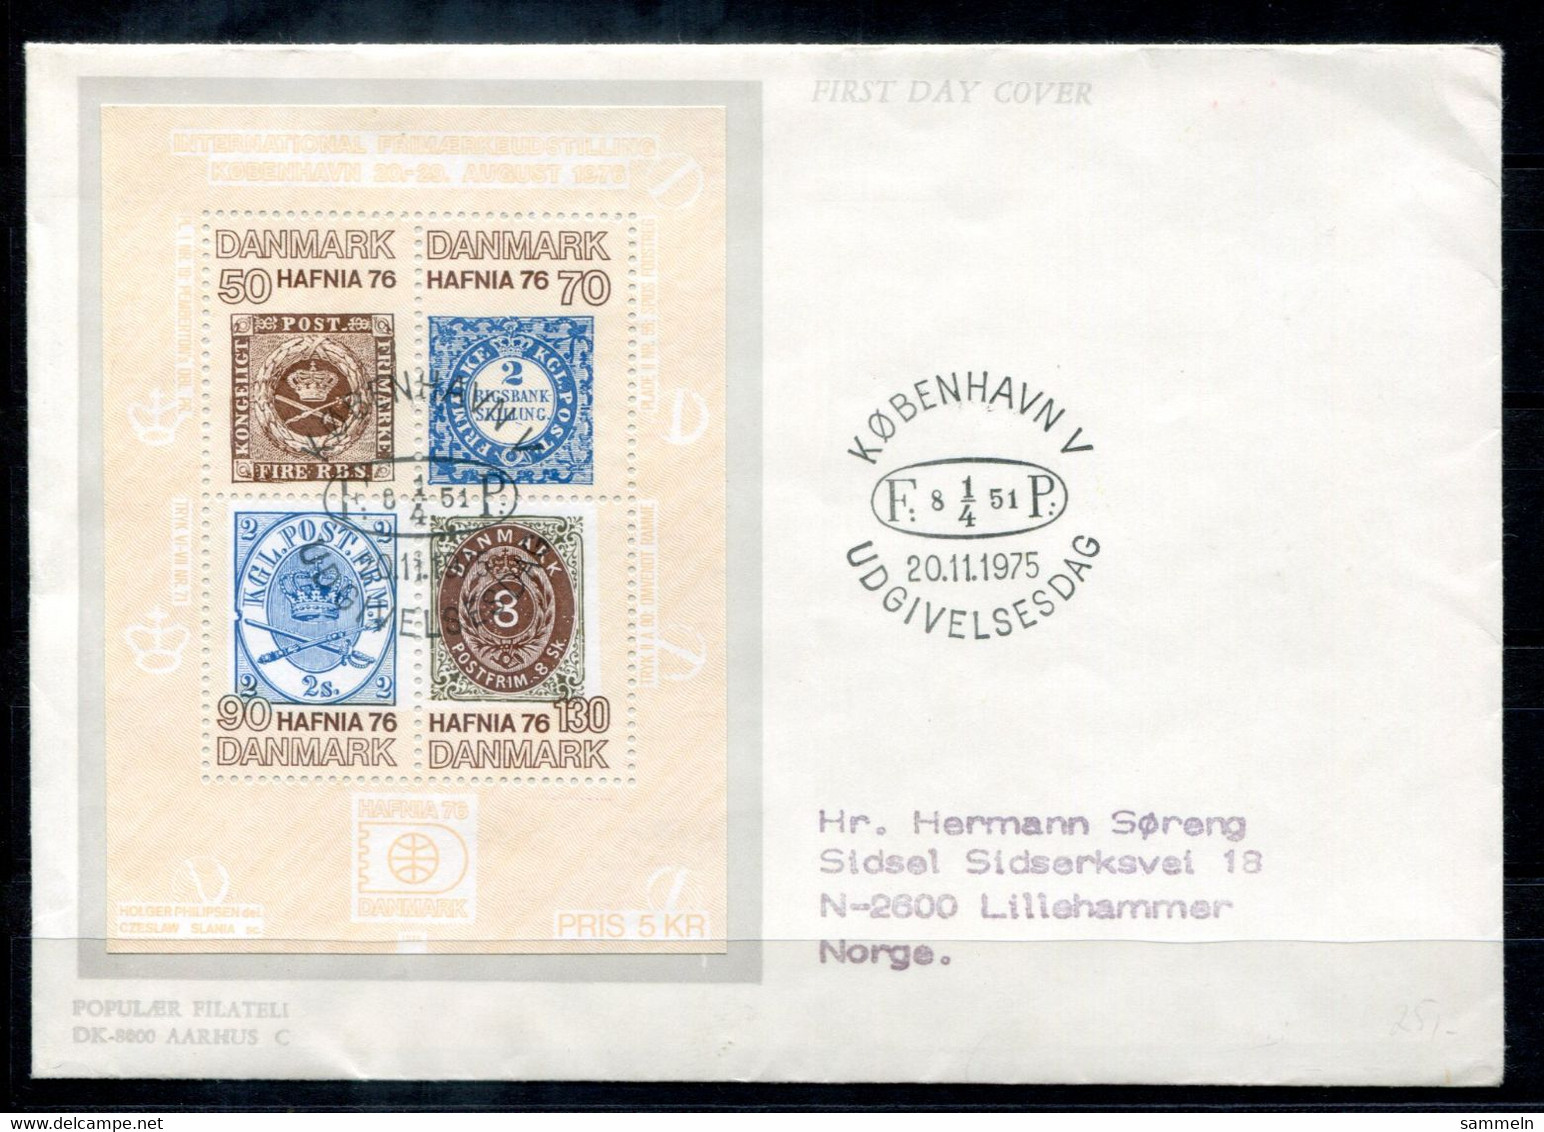 DÄNEMARK Block 2, Bl.2 FDC - HAFNIA '76, Marke Auf Marke, Stamp On Stamp, Timbre Sur Timbre - DENMARK / DANEMARK - Blocs-feuillets